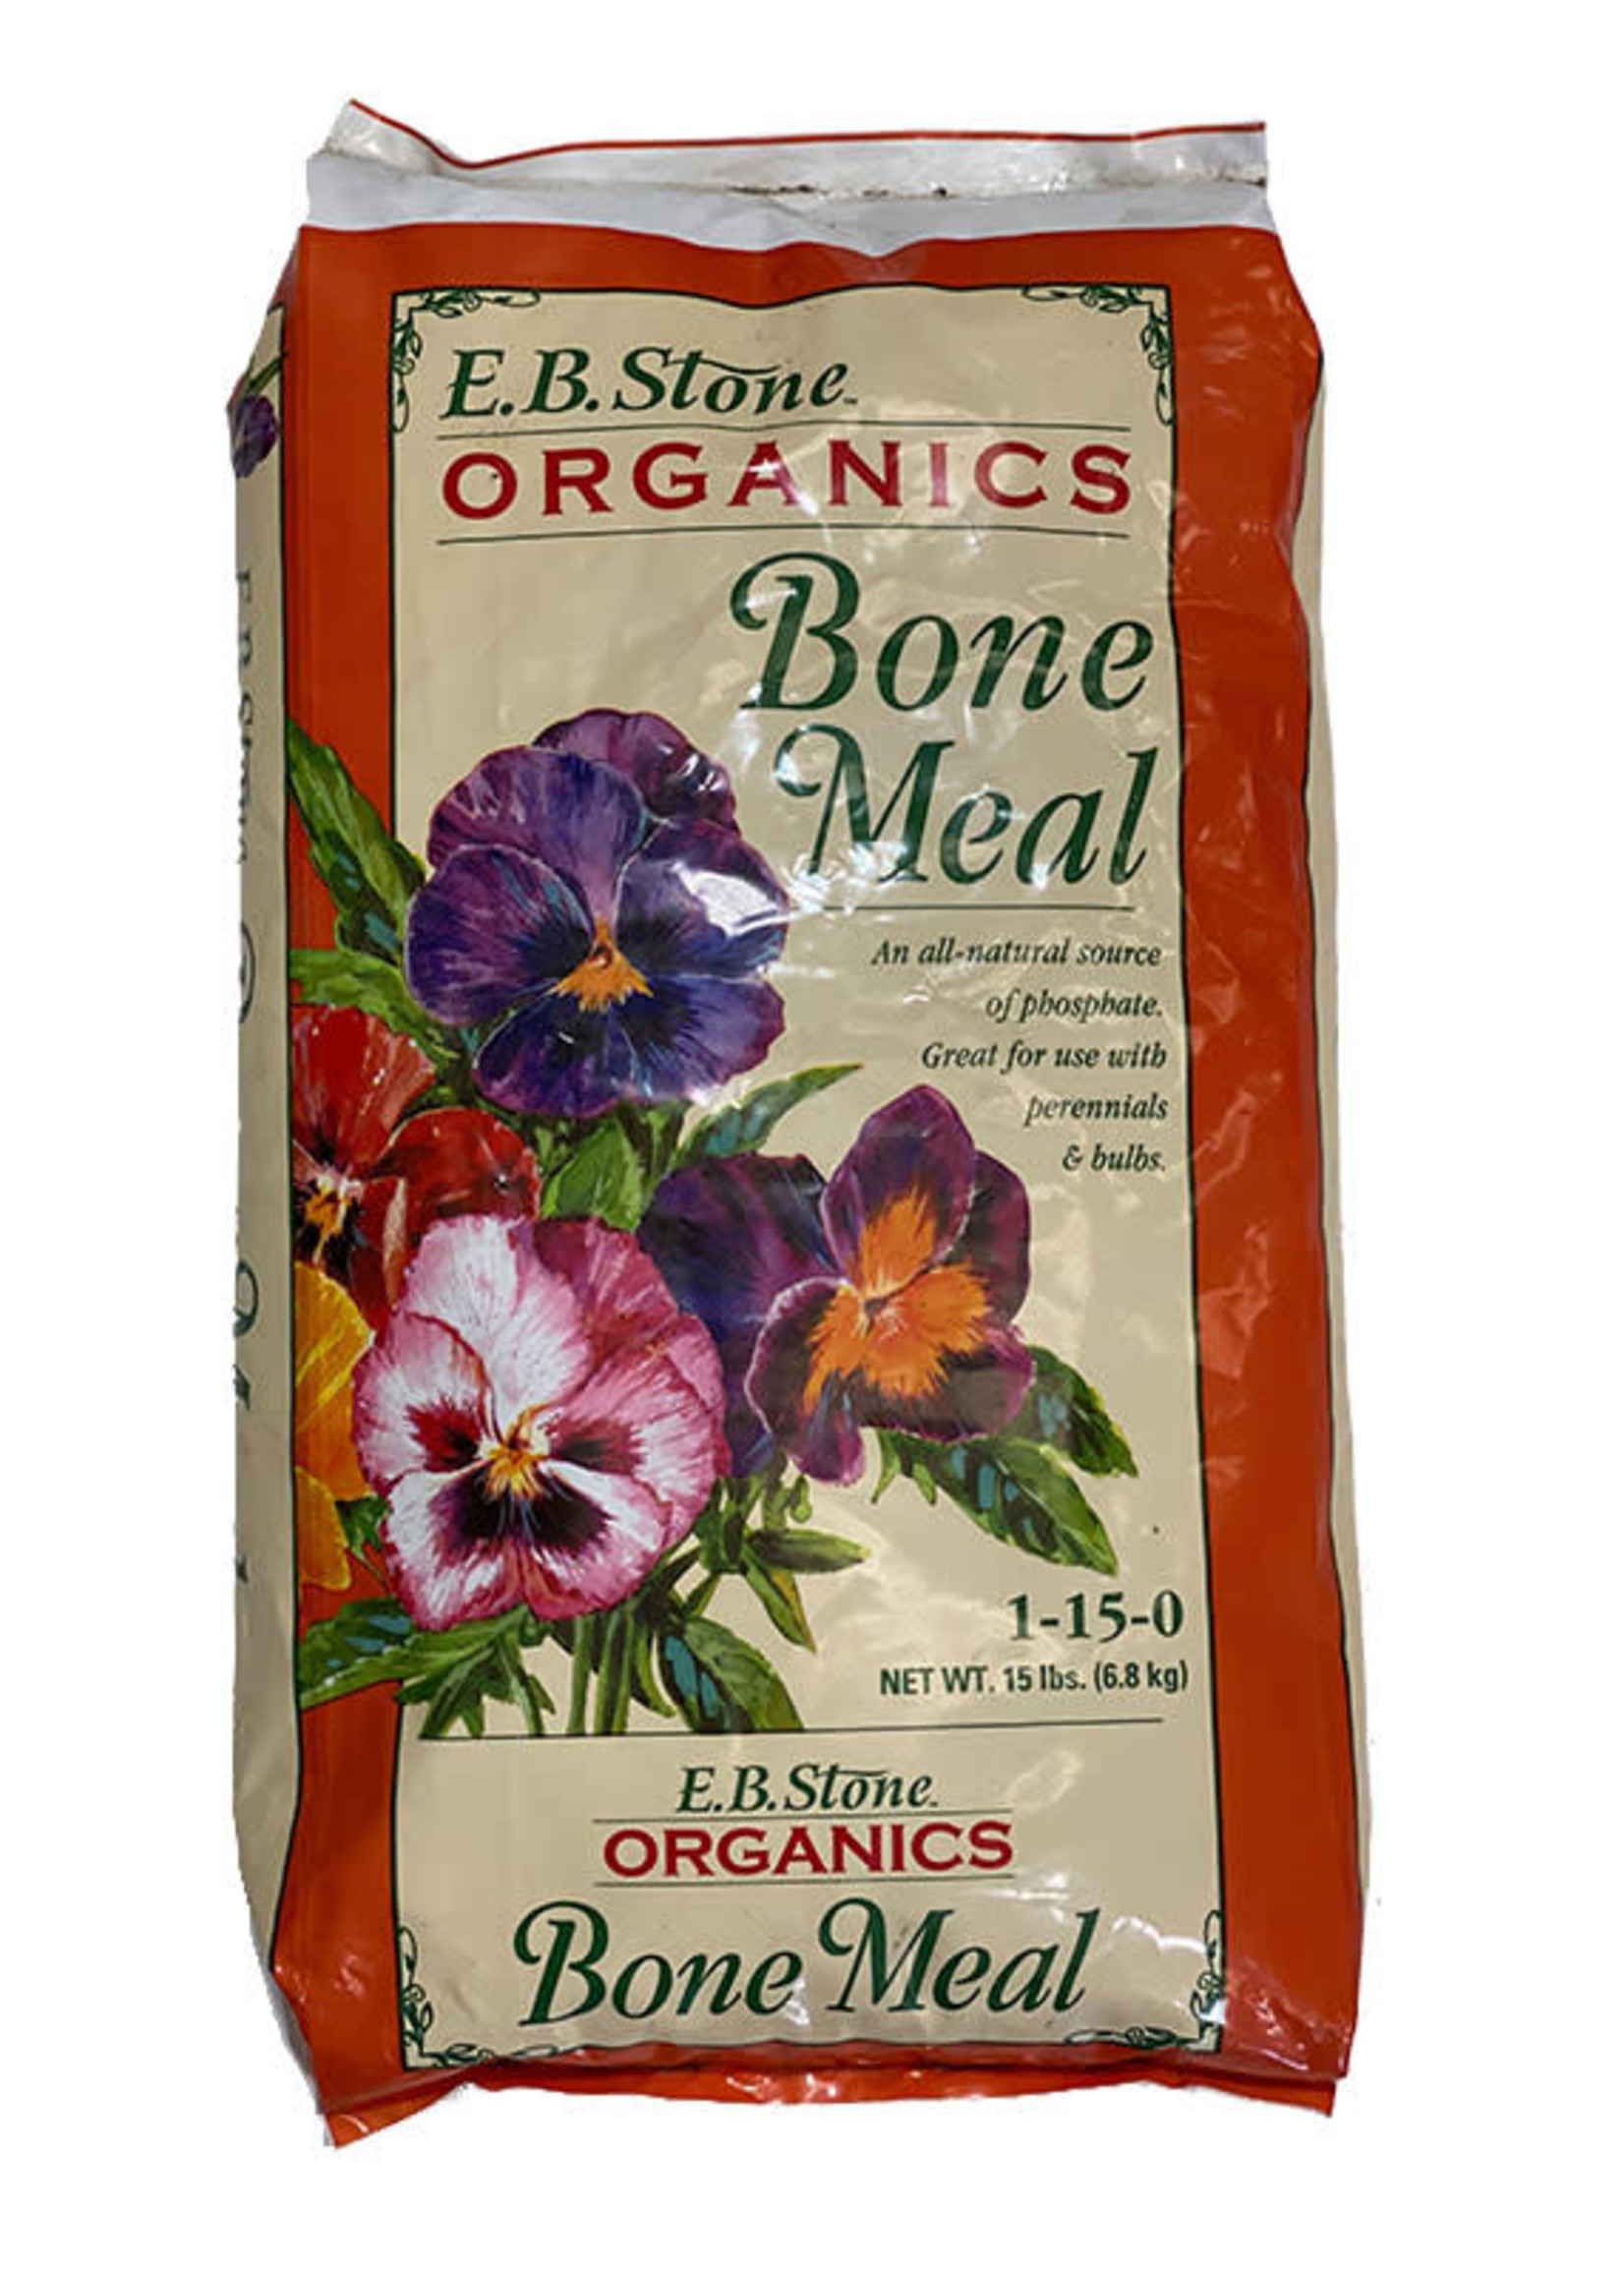 E.B. Stone Organics E.B. Stone Bone Meal 1-15-0